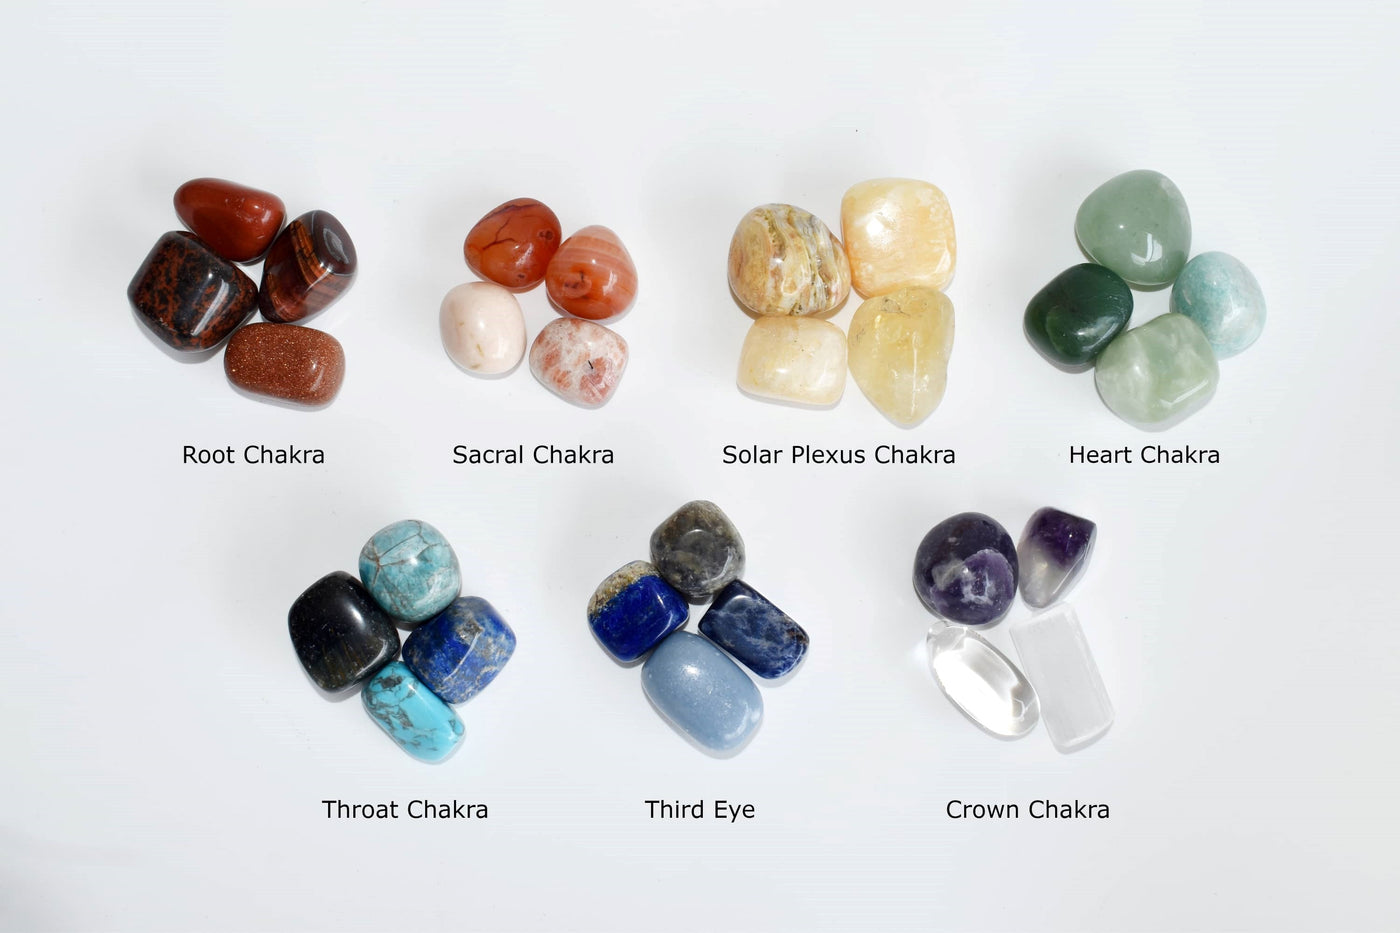 SACRAL Chakra Crystals Kit, Chakra's Stones Tumbled Set, Chakra's Gift